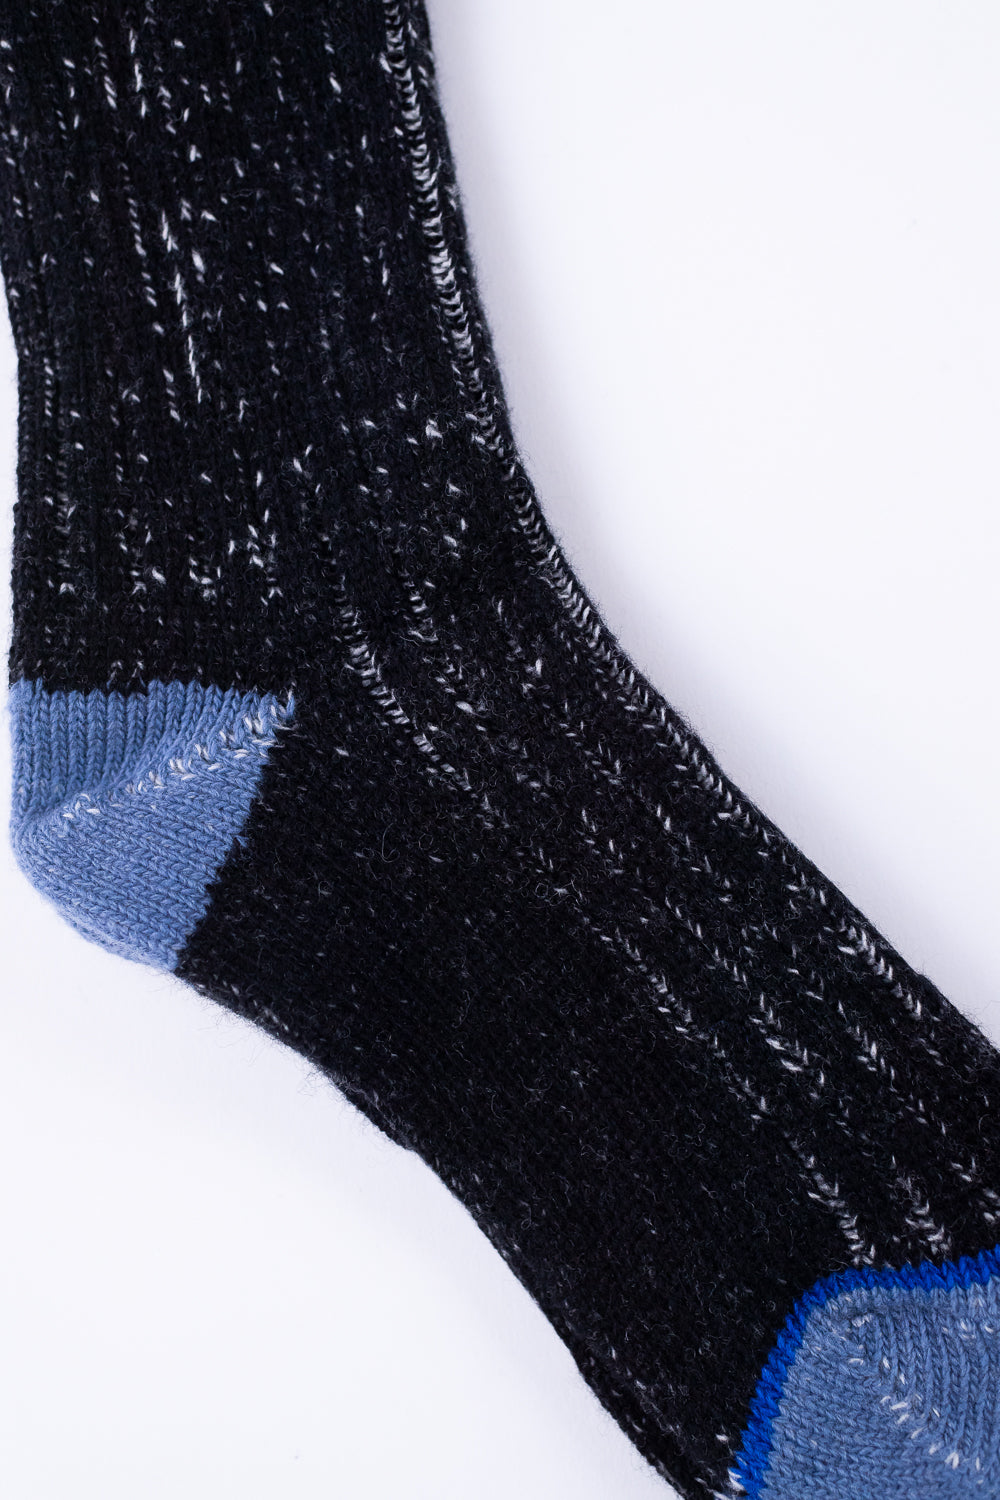 MW72.9902 - Extra Fine Merino Wool Socks - Deep Black, Nature